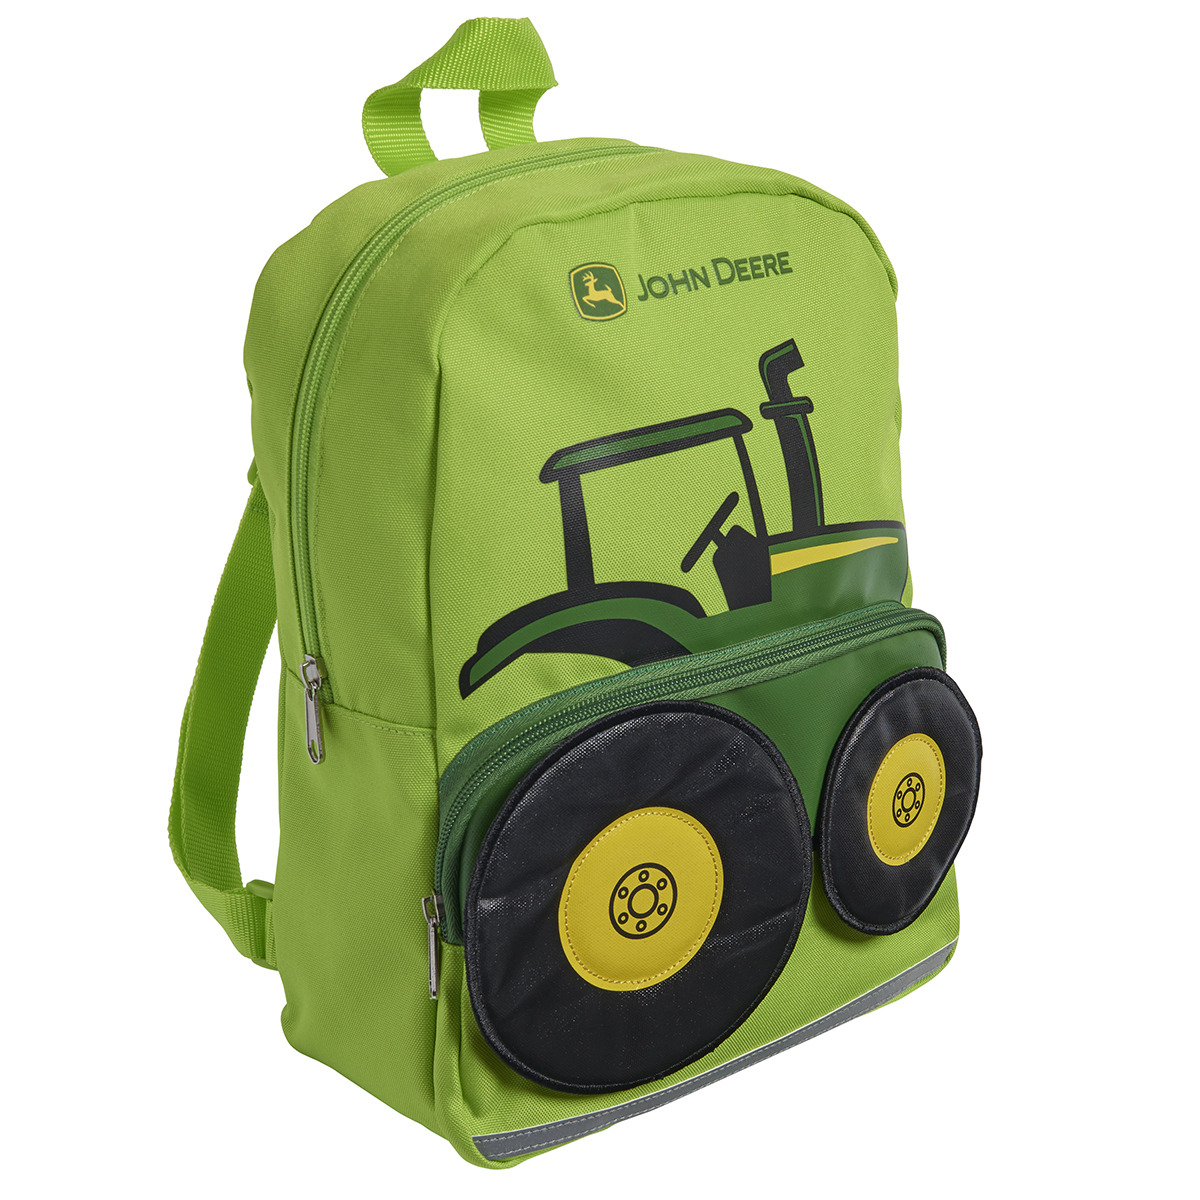 John Deere Toddler Lime Green Tractor Bookbag/Backpack - LP54065 - image 1 of 3